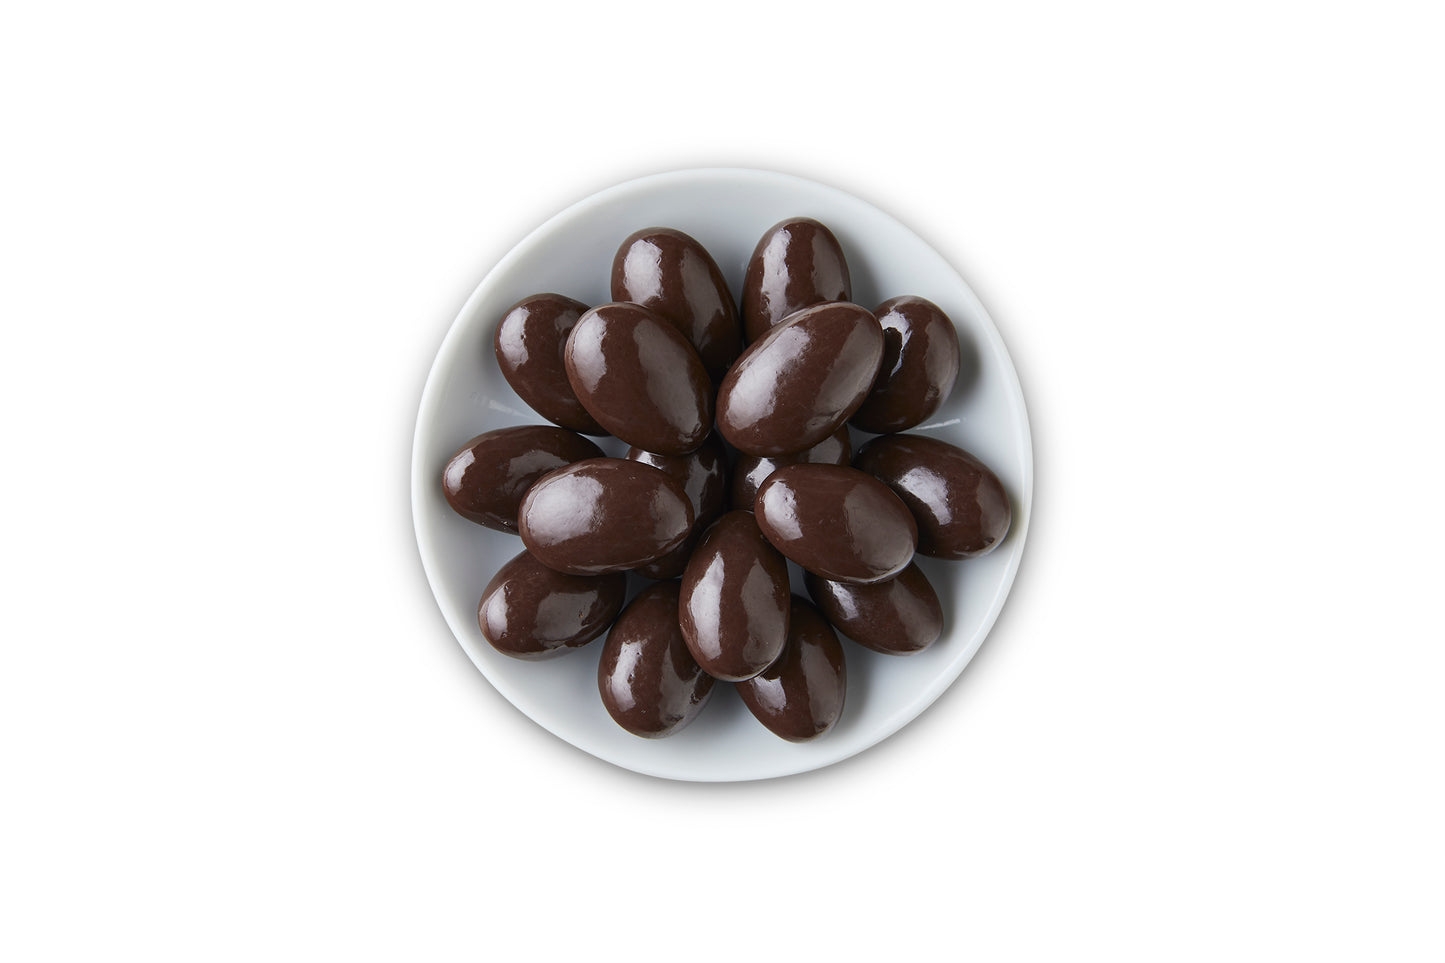 Chocolate Sea Salt Caramel Eggs - Edelweiss Chocolates - Gourmet Premium Handmade Chocolates made in Beverly Hills and Los Angeles